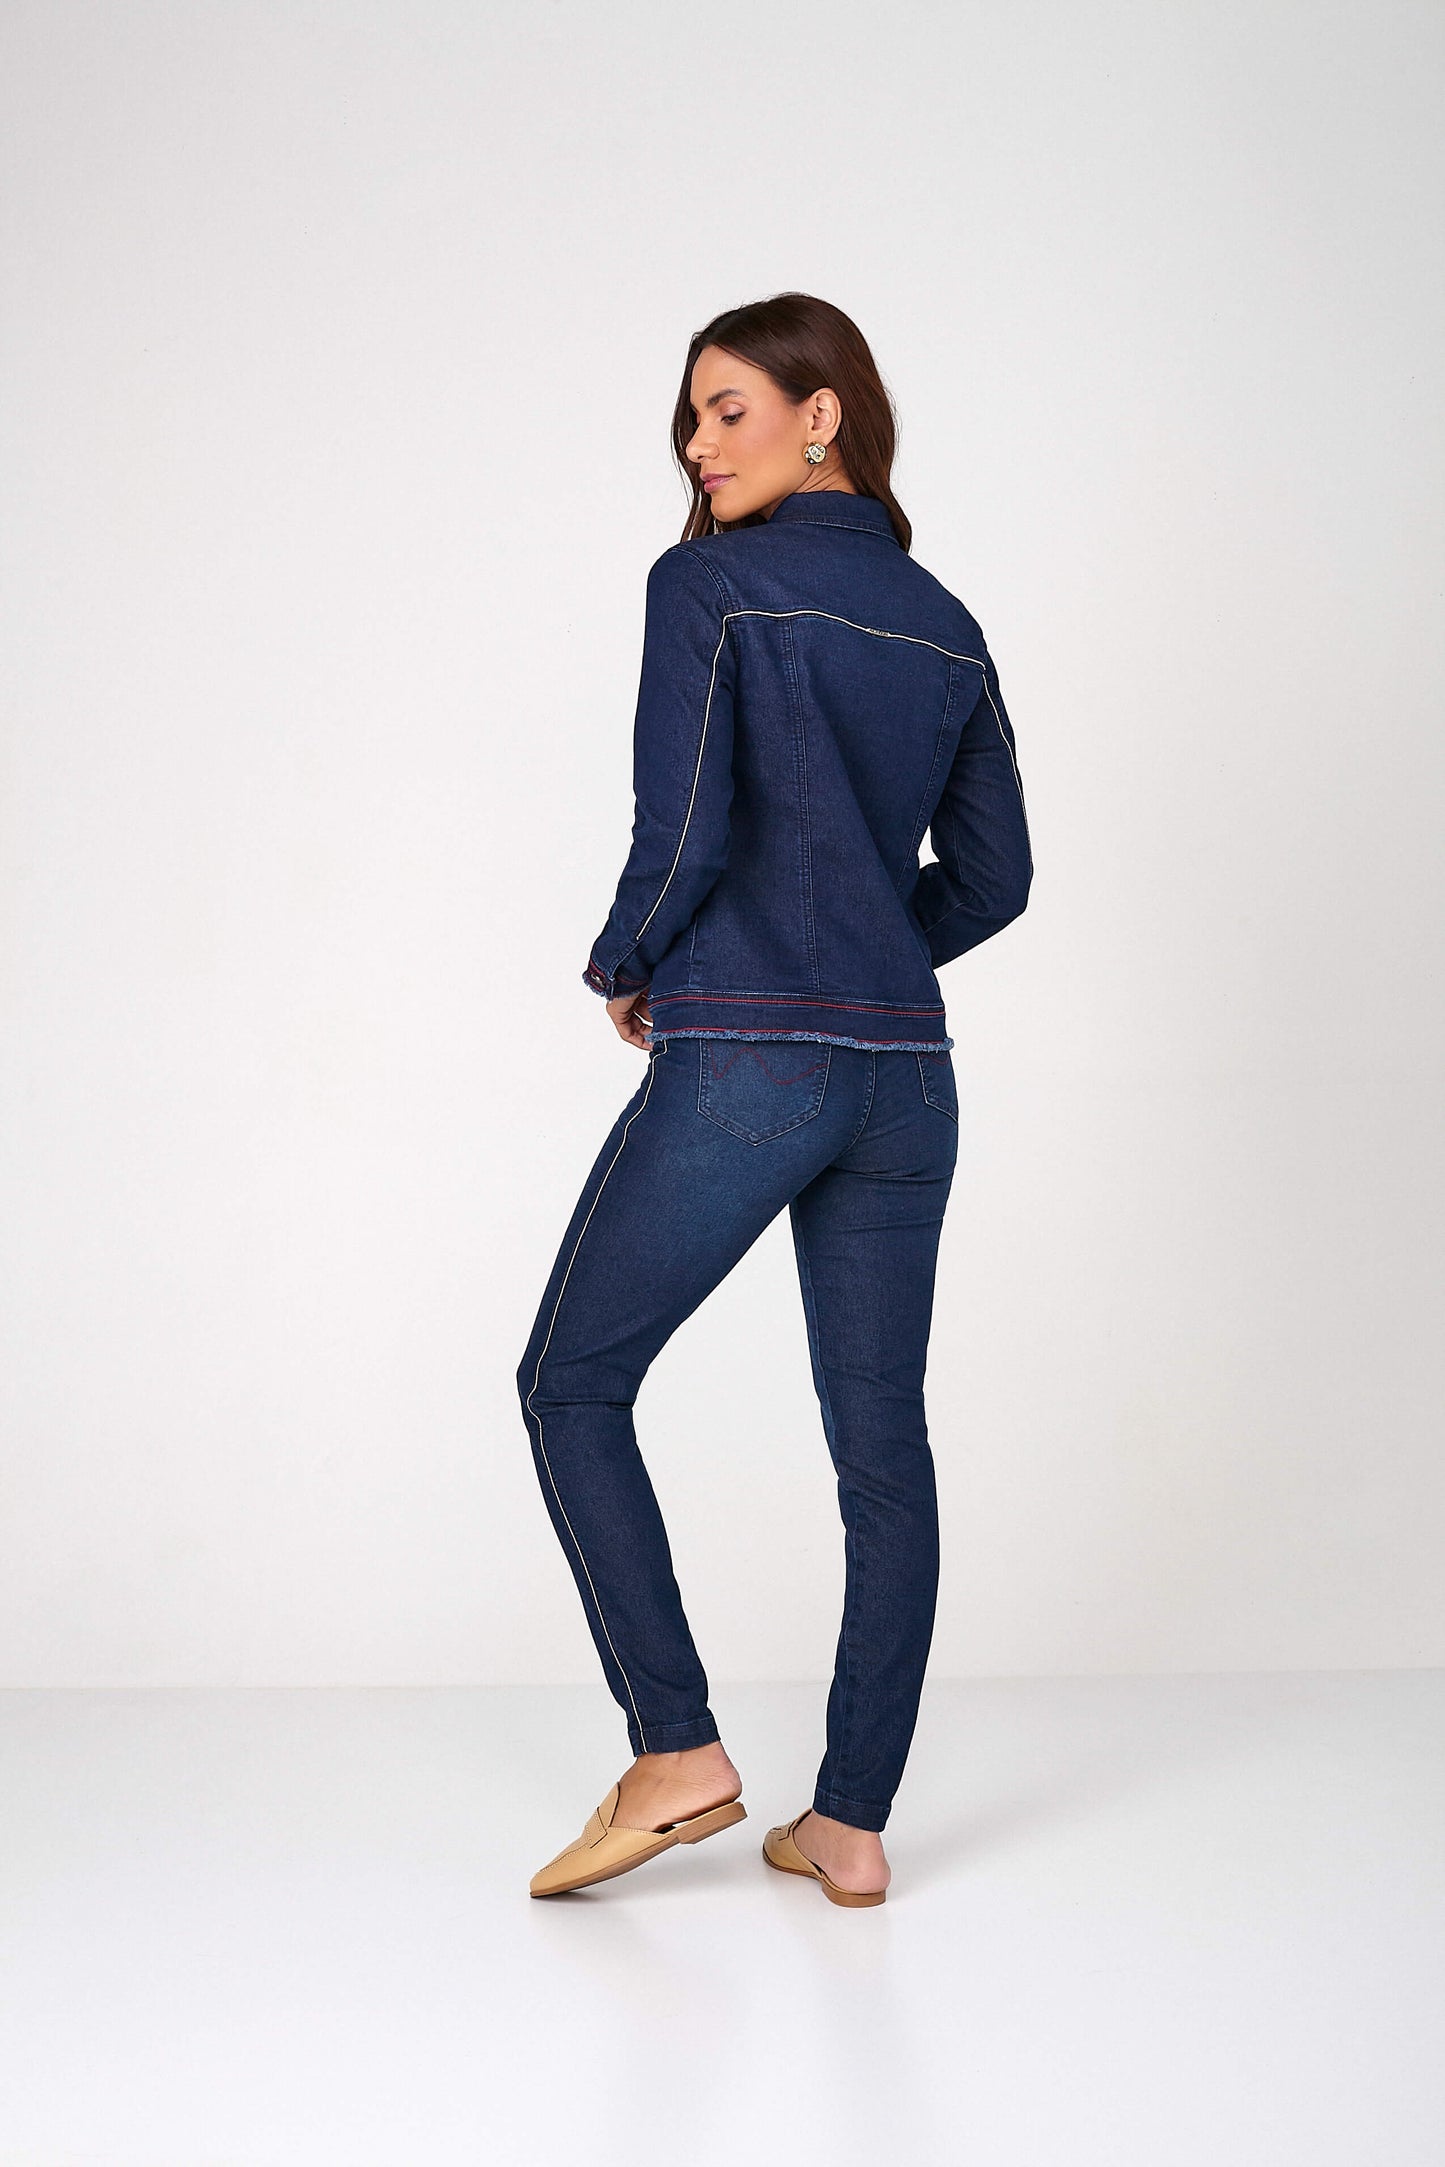 jaqueta jeans tradicional navy